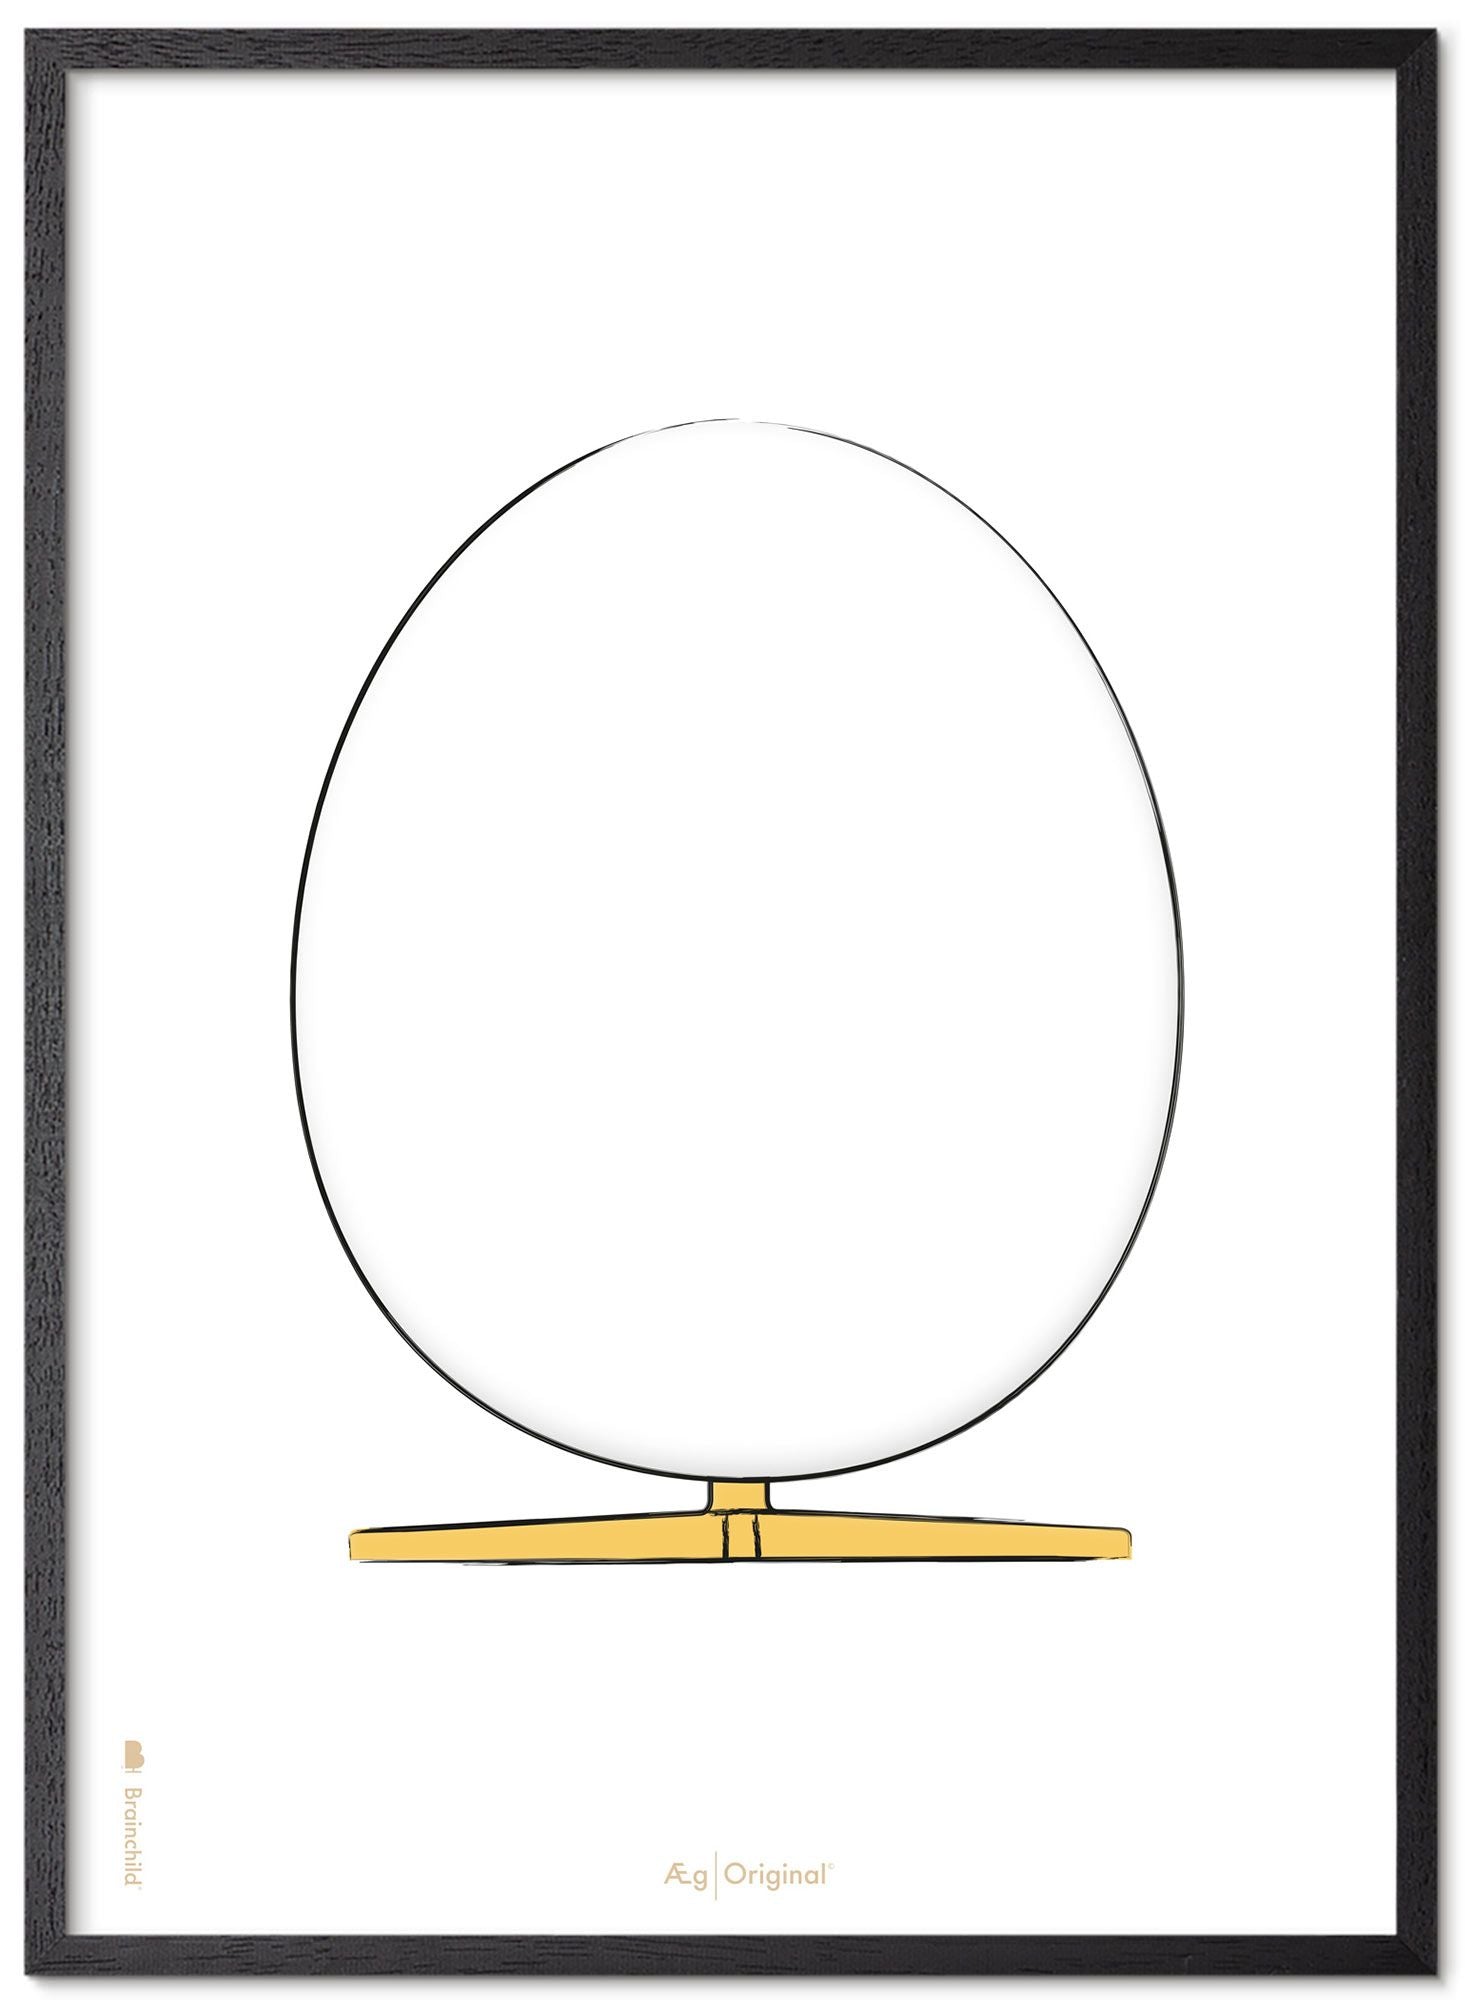 Brainchild The Egg Design Sketch Poster Frame Made Of Black Lacquered Wood 30x40 Cm, White Background